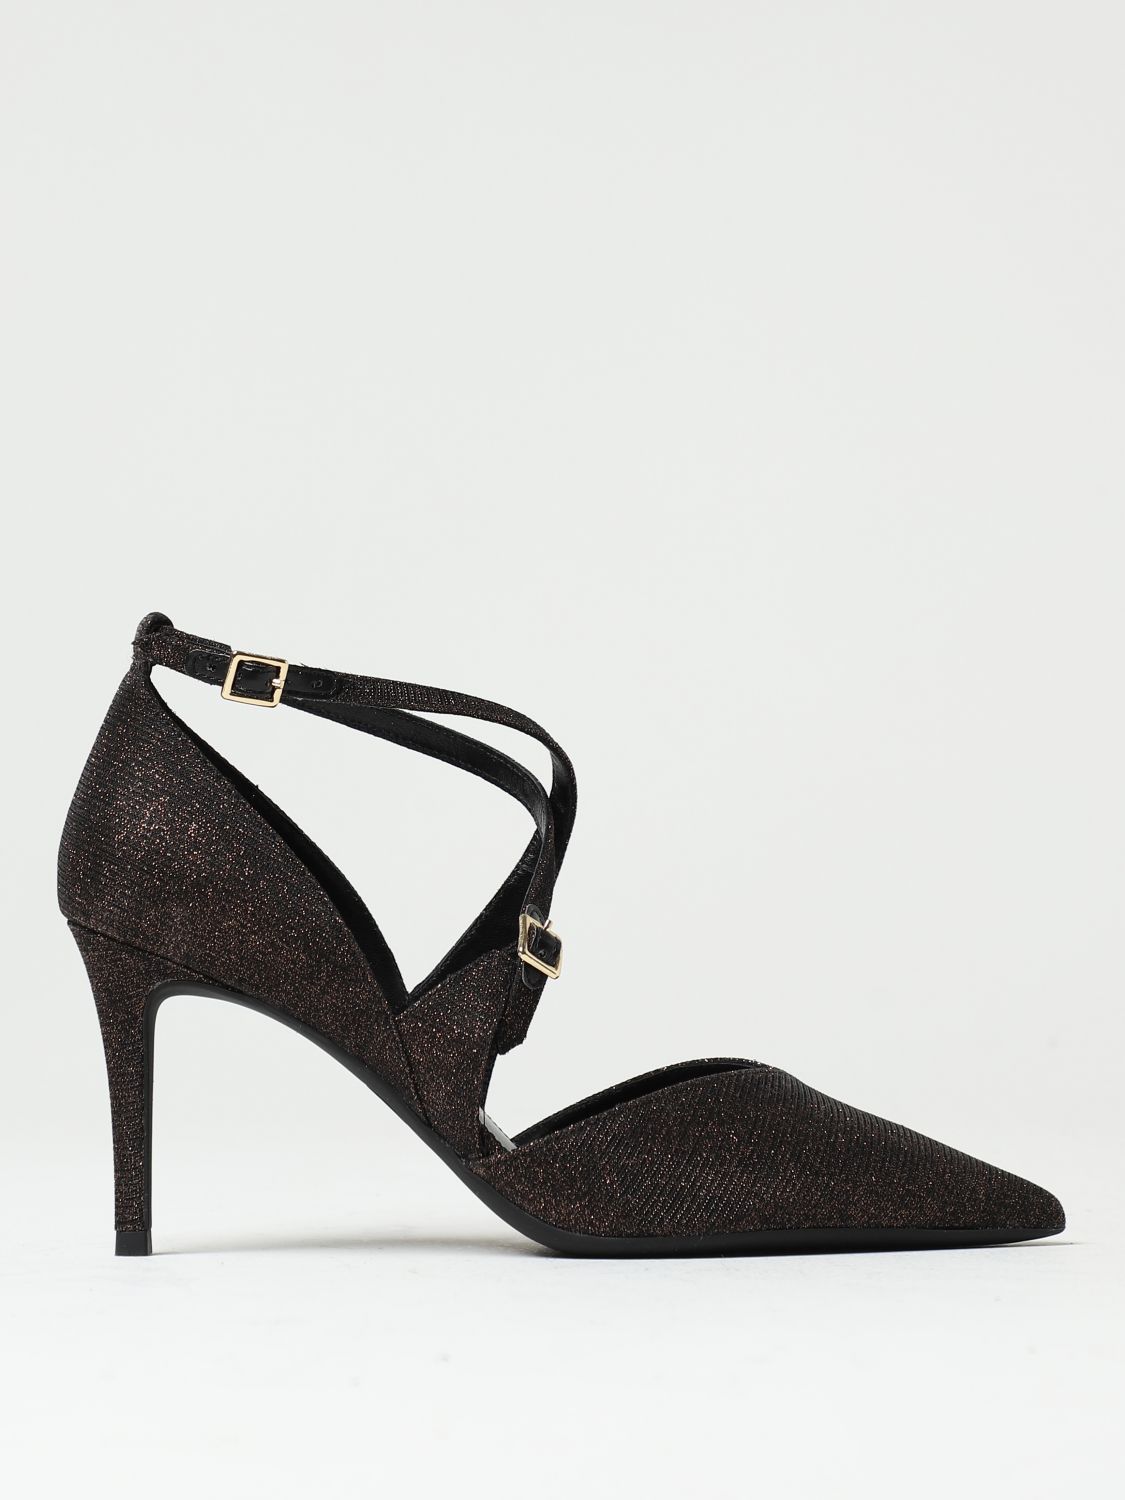 MICHAEL KORS: high heel shoes for woman - Black | Michael Kors high ...